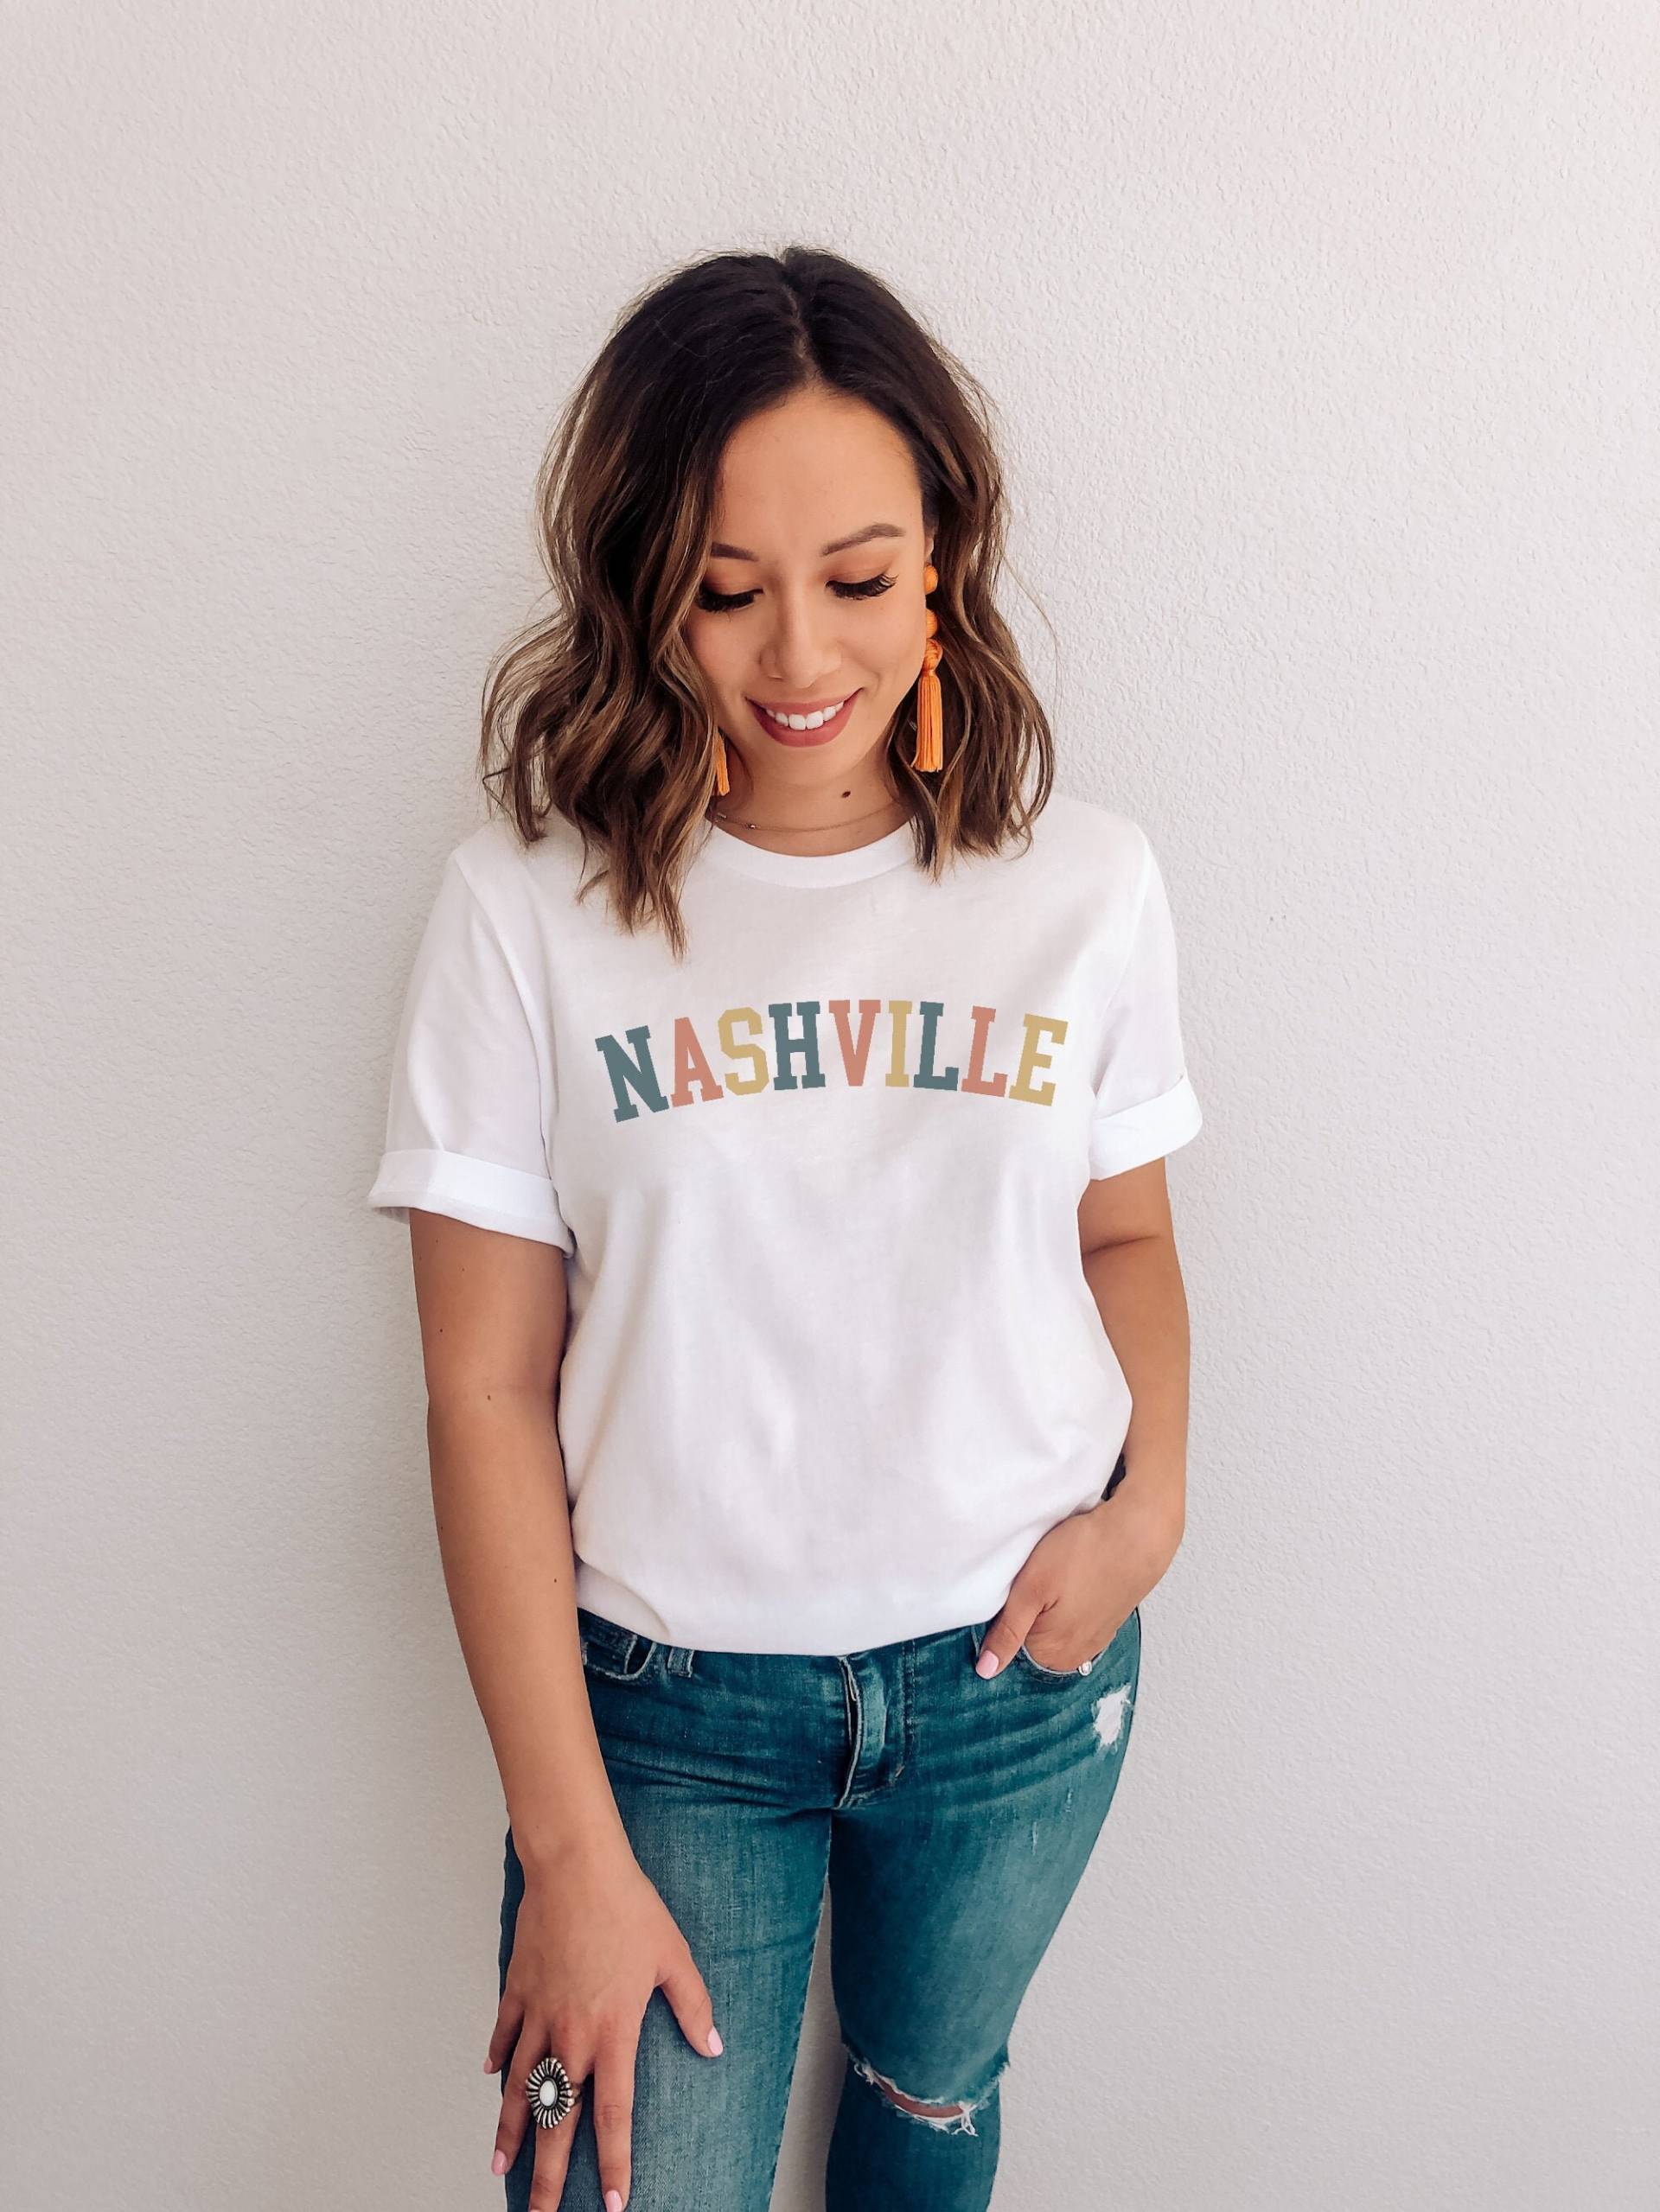 Nashville Shirt, Tennessee Tshirt, Retro Vintage State Pride Süßes Shirt von KahanaClothing